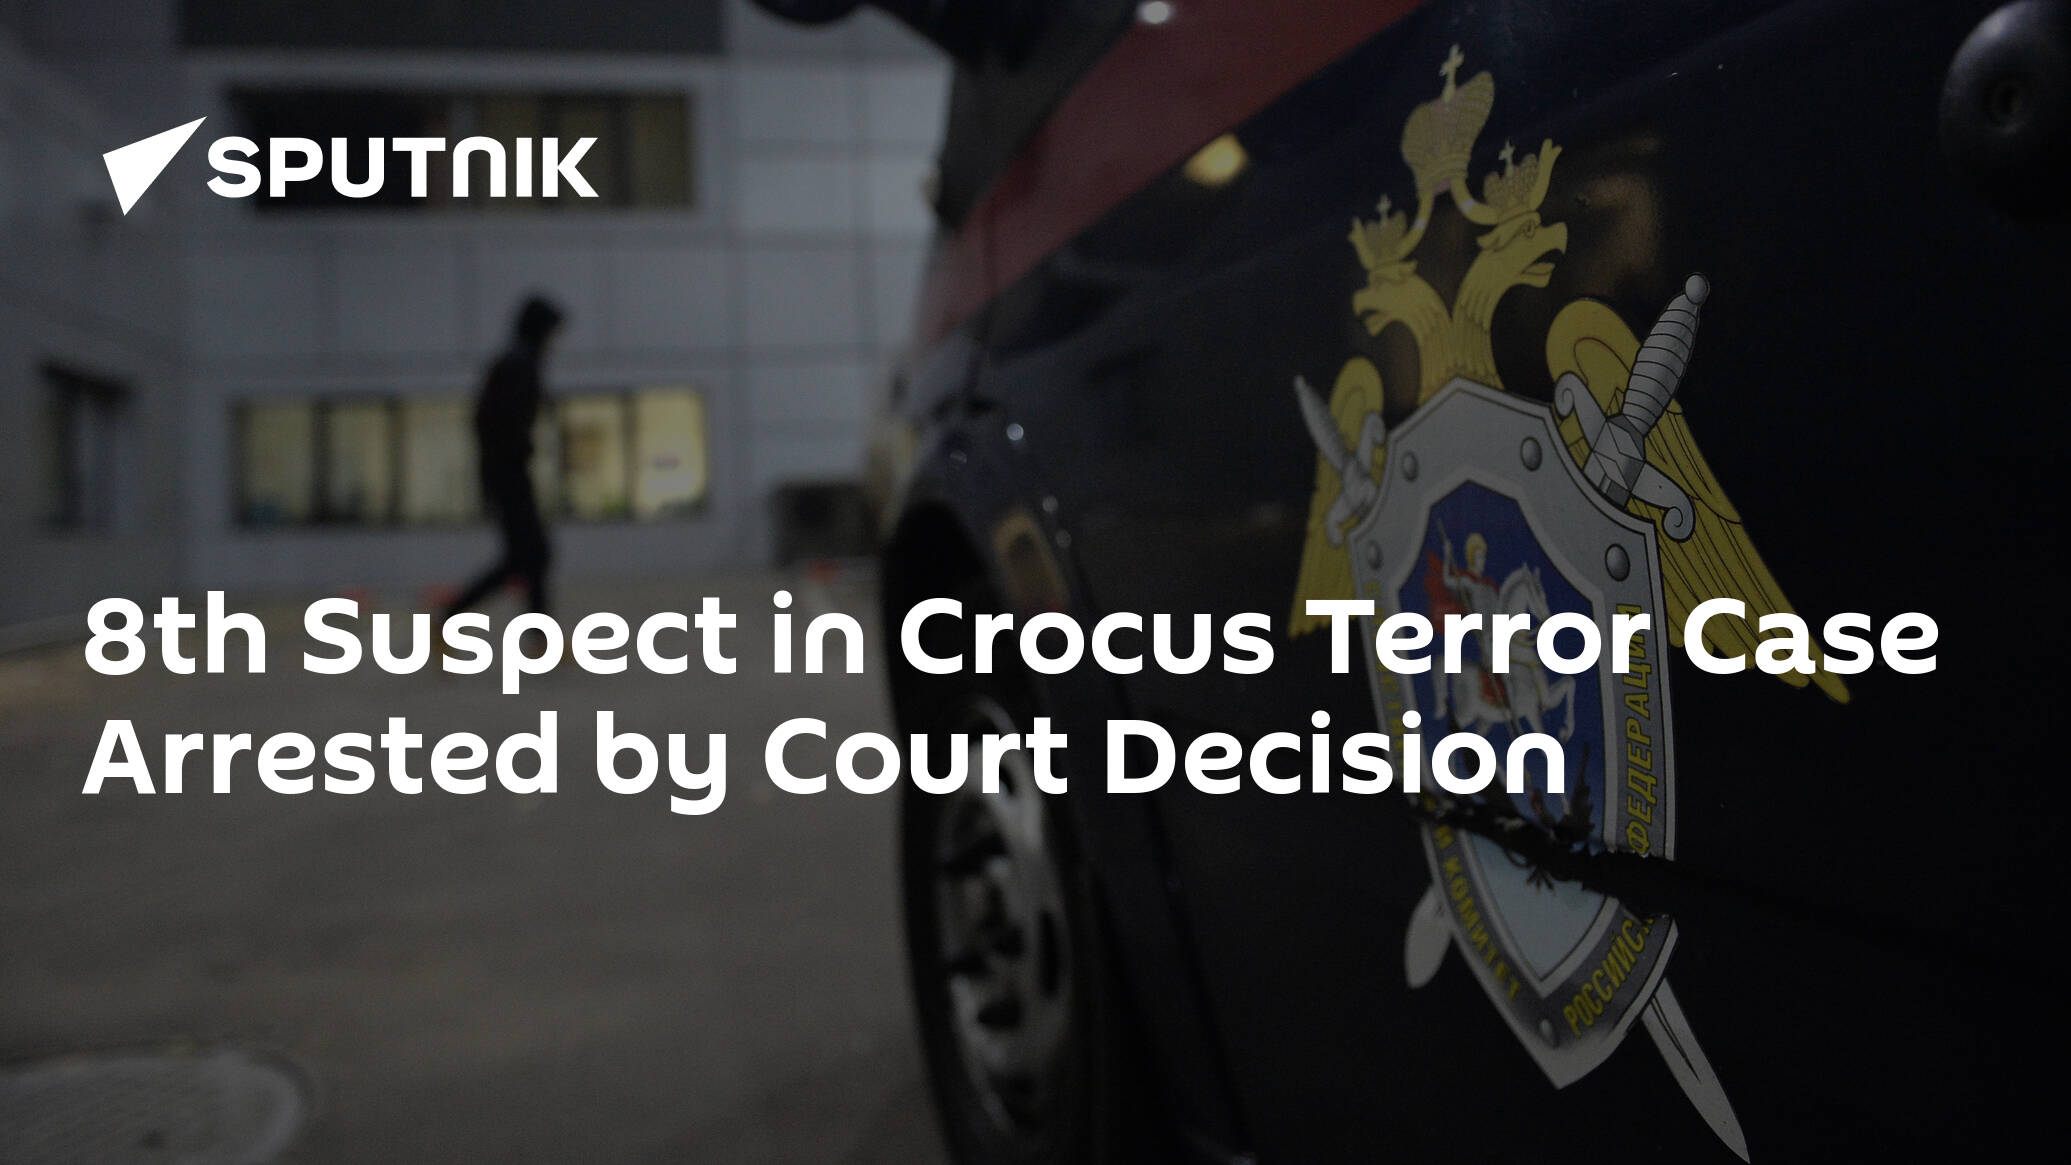 Russian Investigators Seek Arrest Warrant for 8th Suspect in Crocus Terror Case